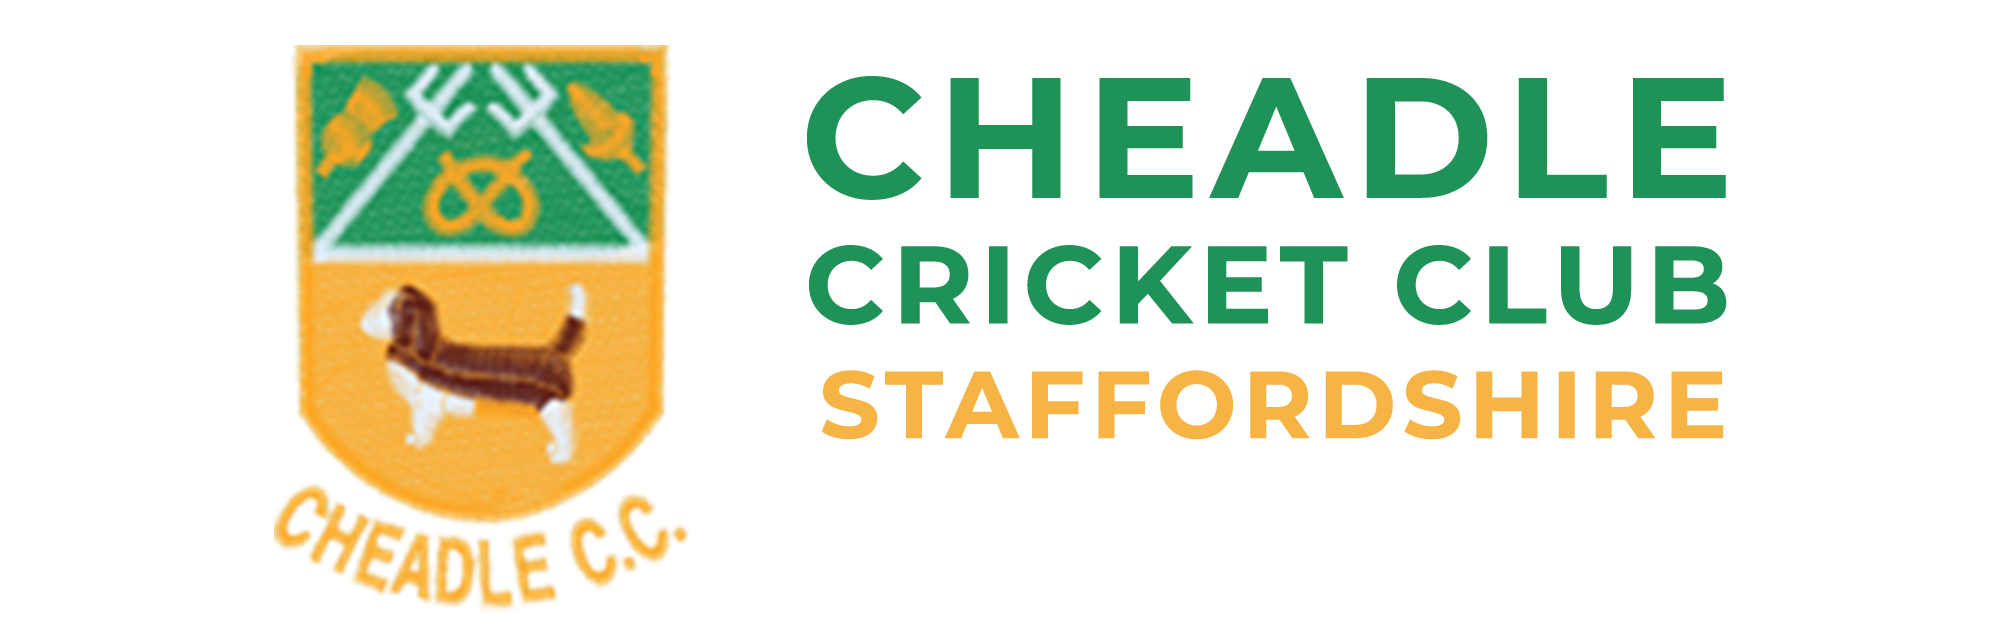 Cheadle Cricket Club